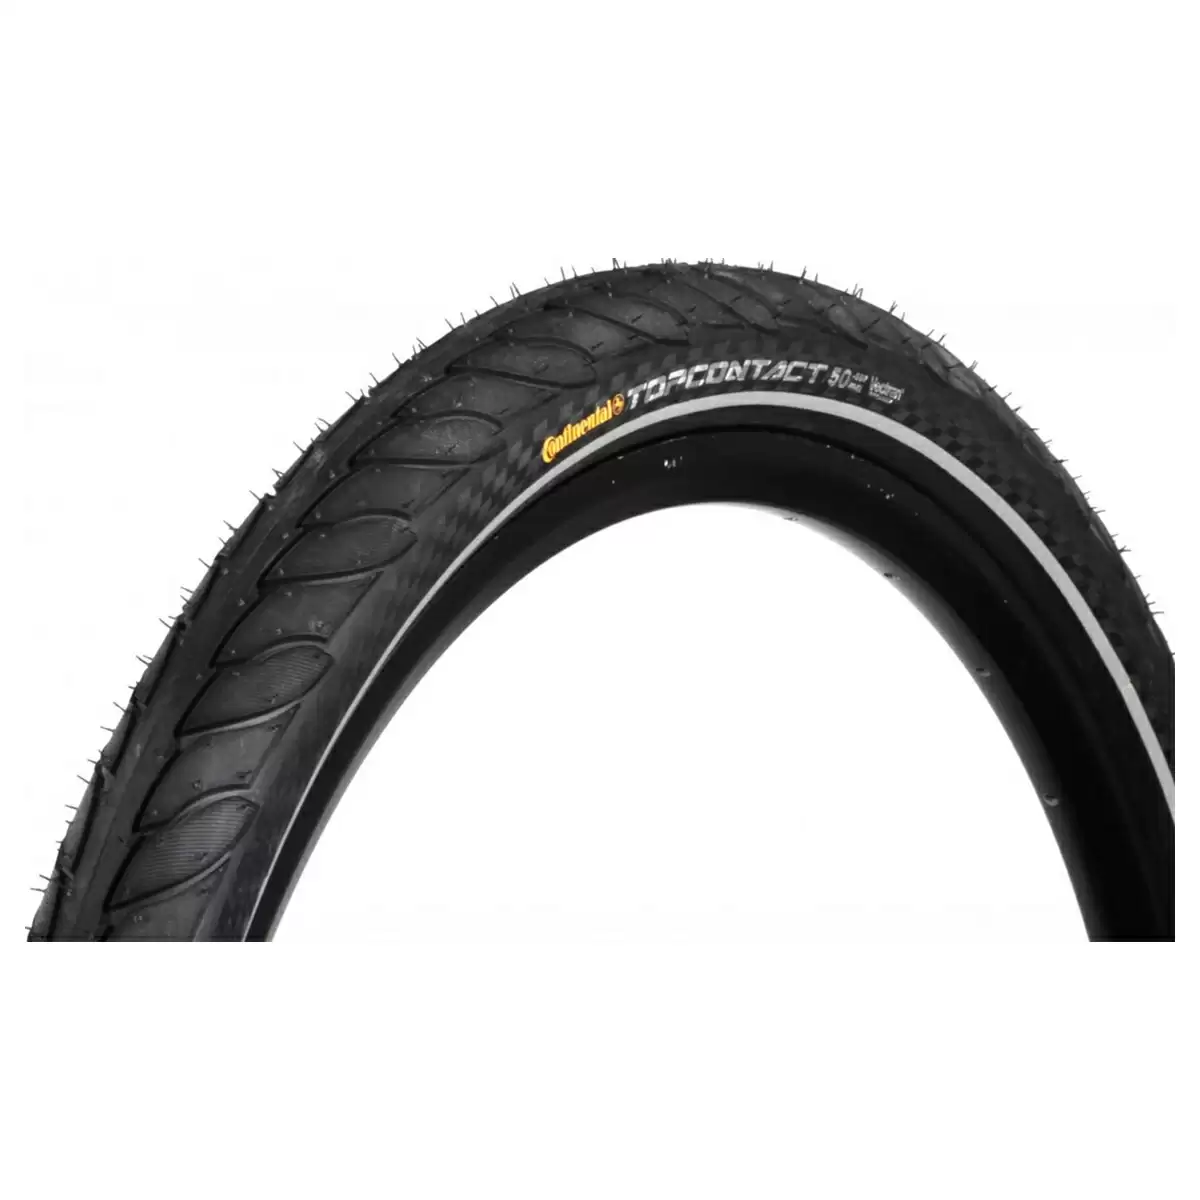 Tire Top Contact II 32-622 (700x32) Reflex Folding Black - image